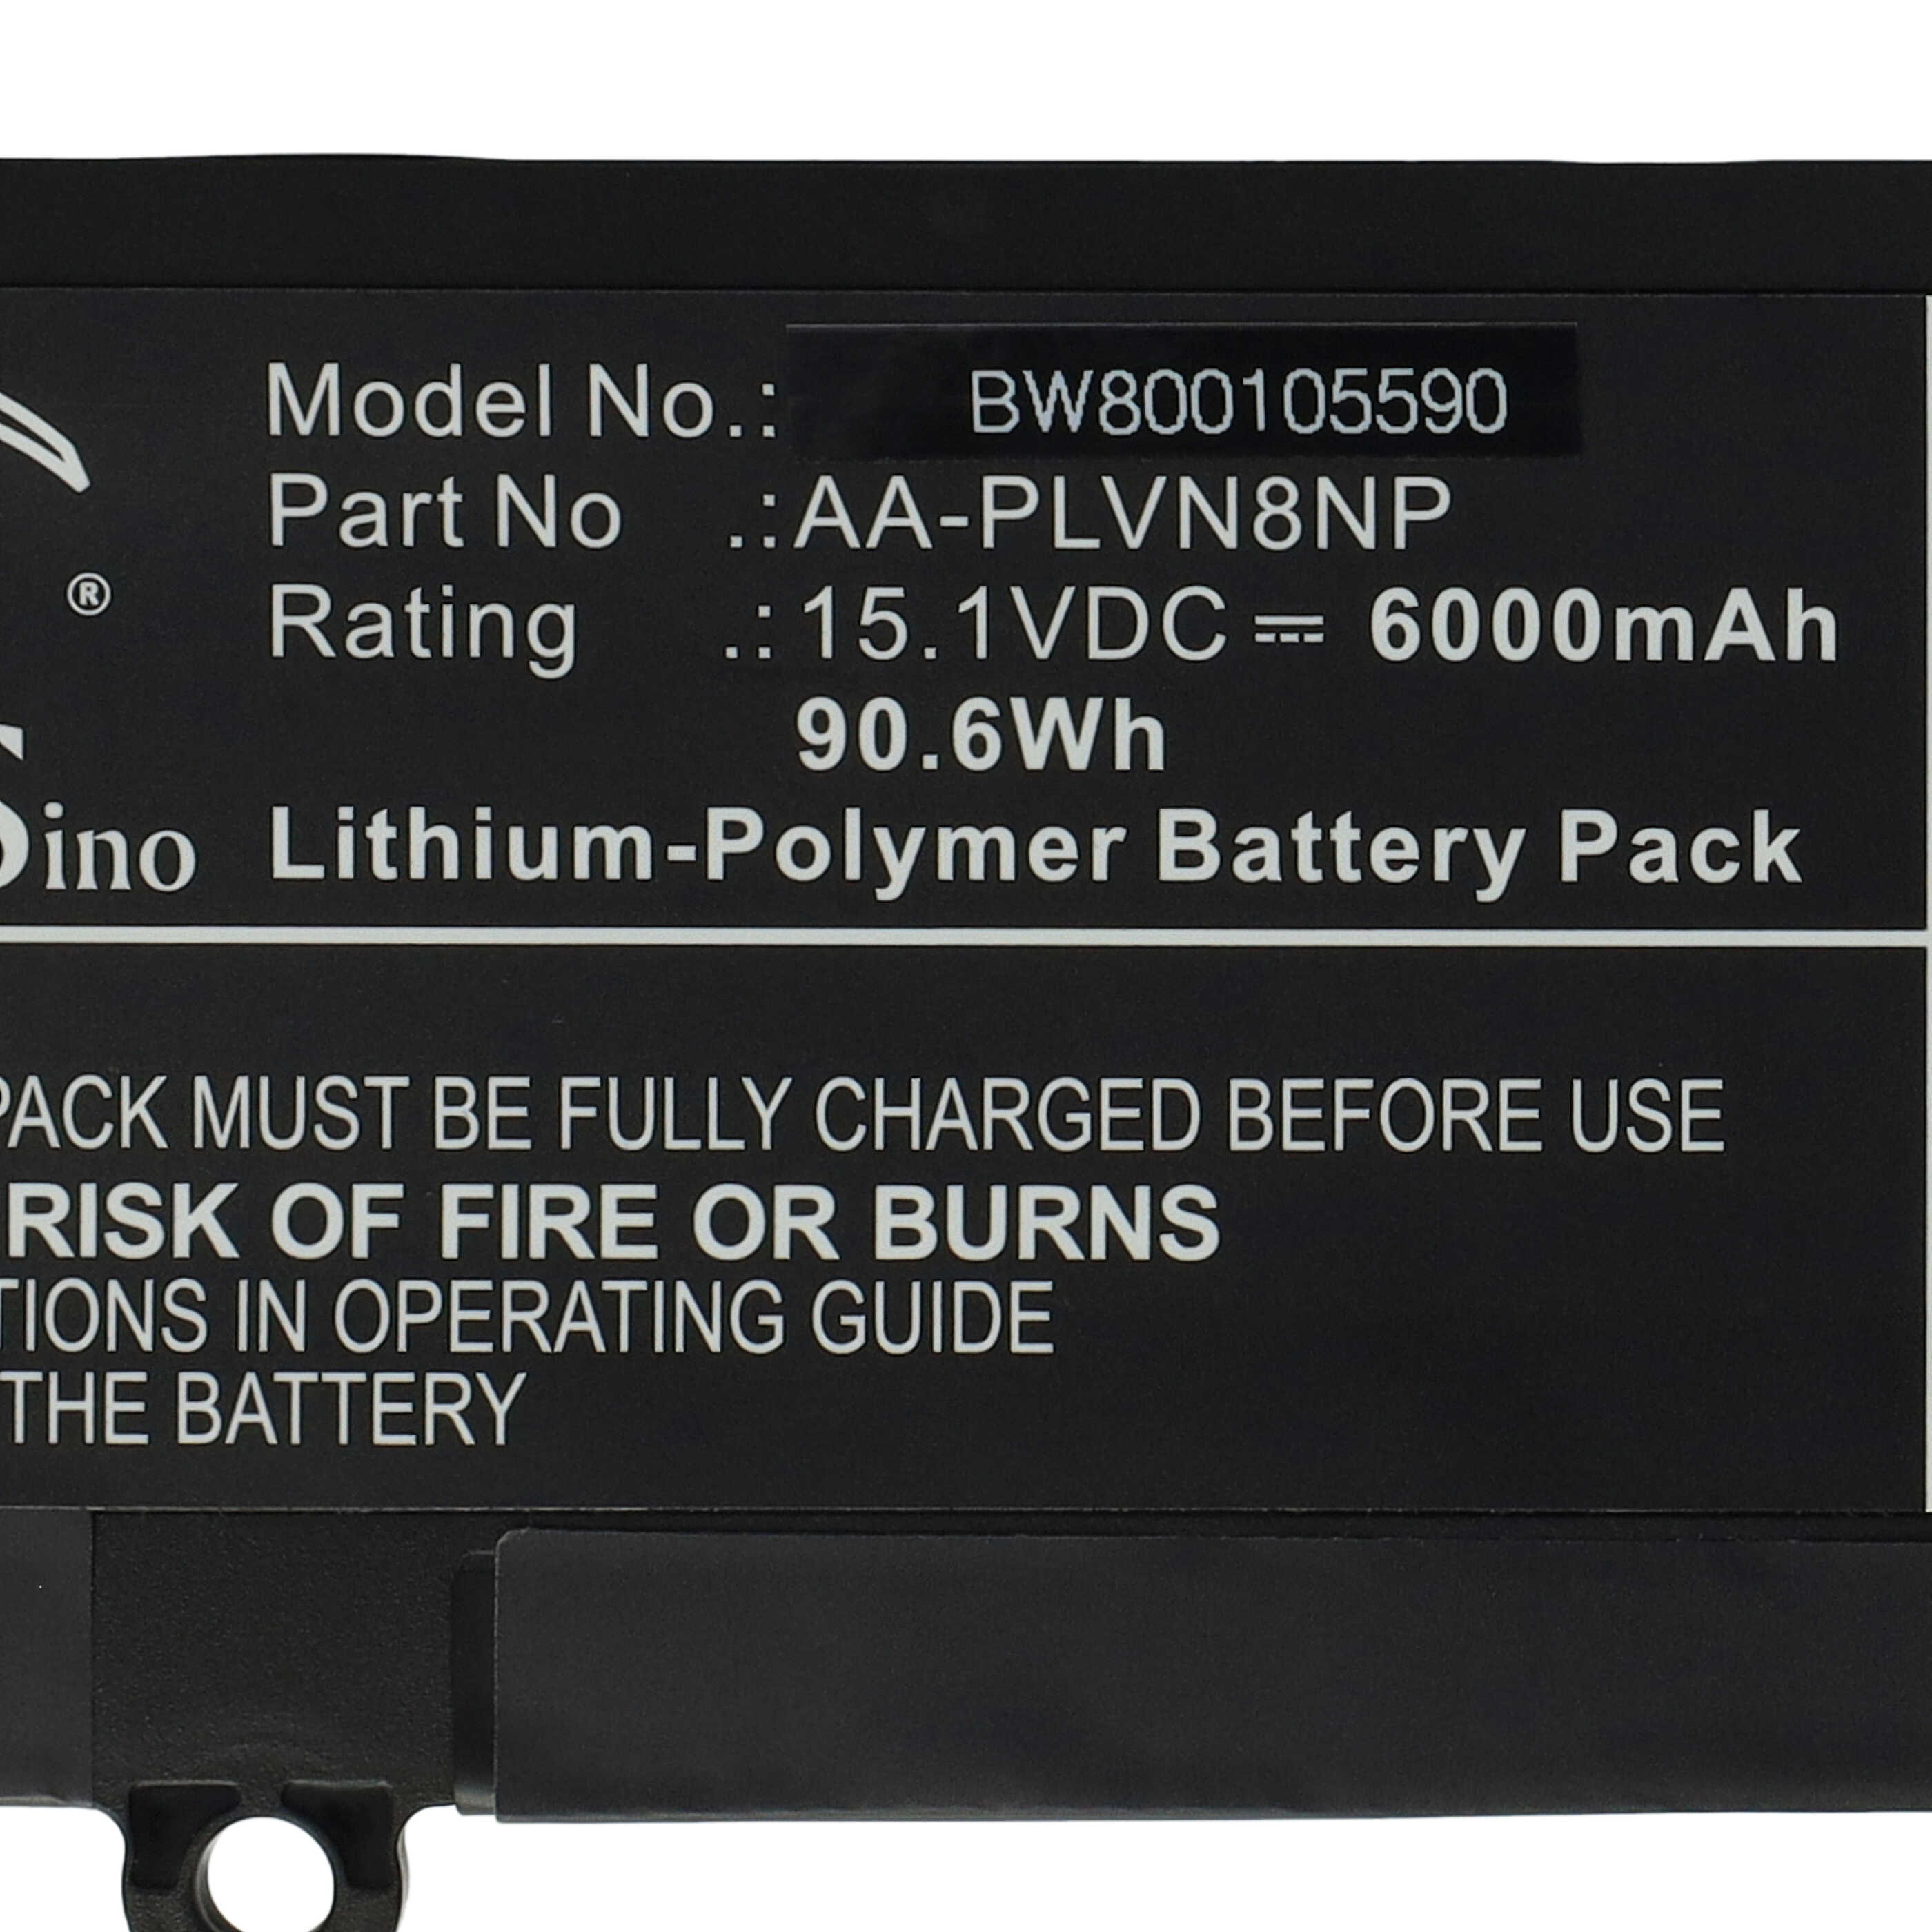 Akumulator do laptopa zamiennik Samsung AA-PLVN8NP, BA43-00359A - 6000 mAh 15,1 V LiPo, czarny